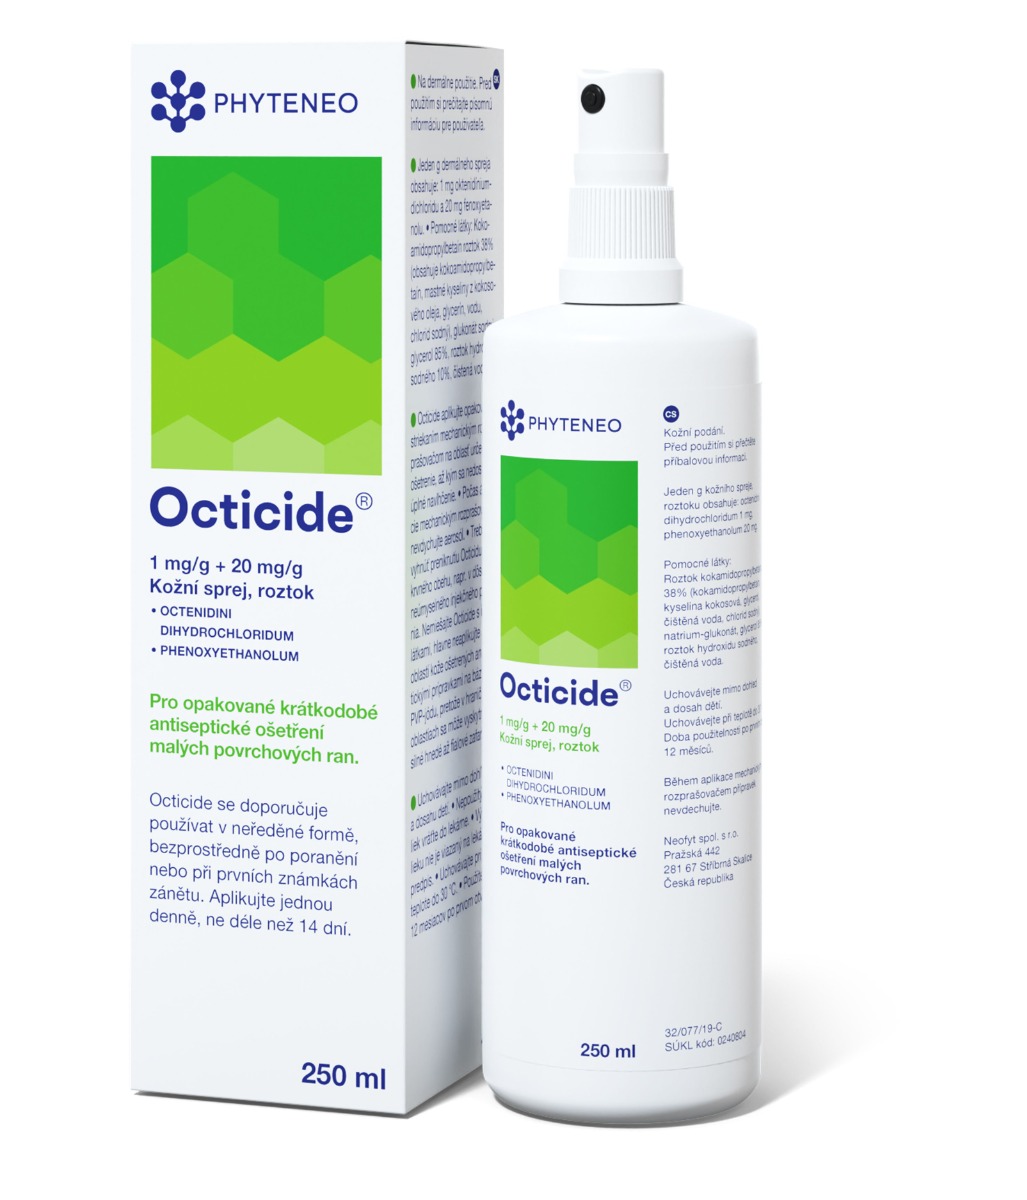 Phyteneo Octicide 1 mg/g + 20 mg/g kožní sprej